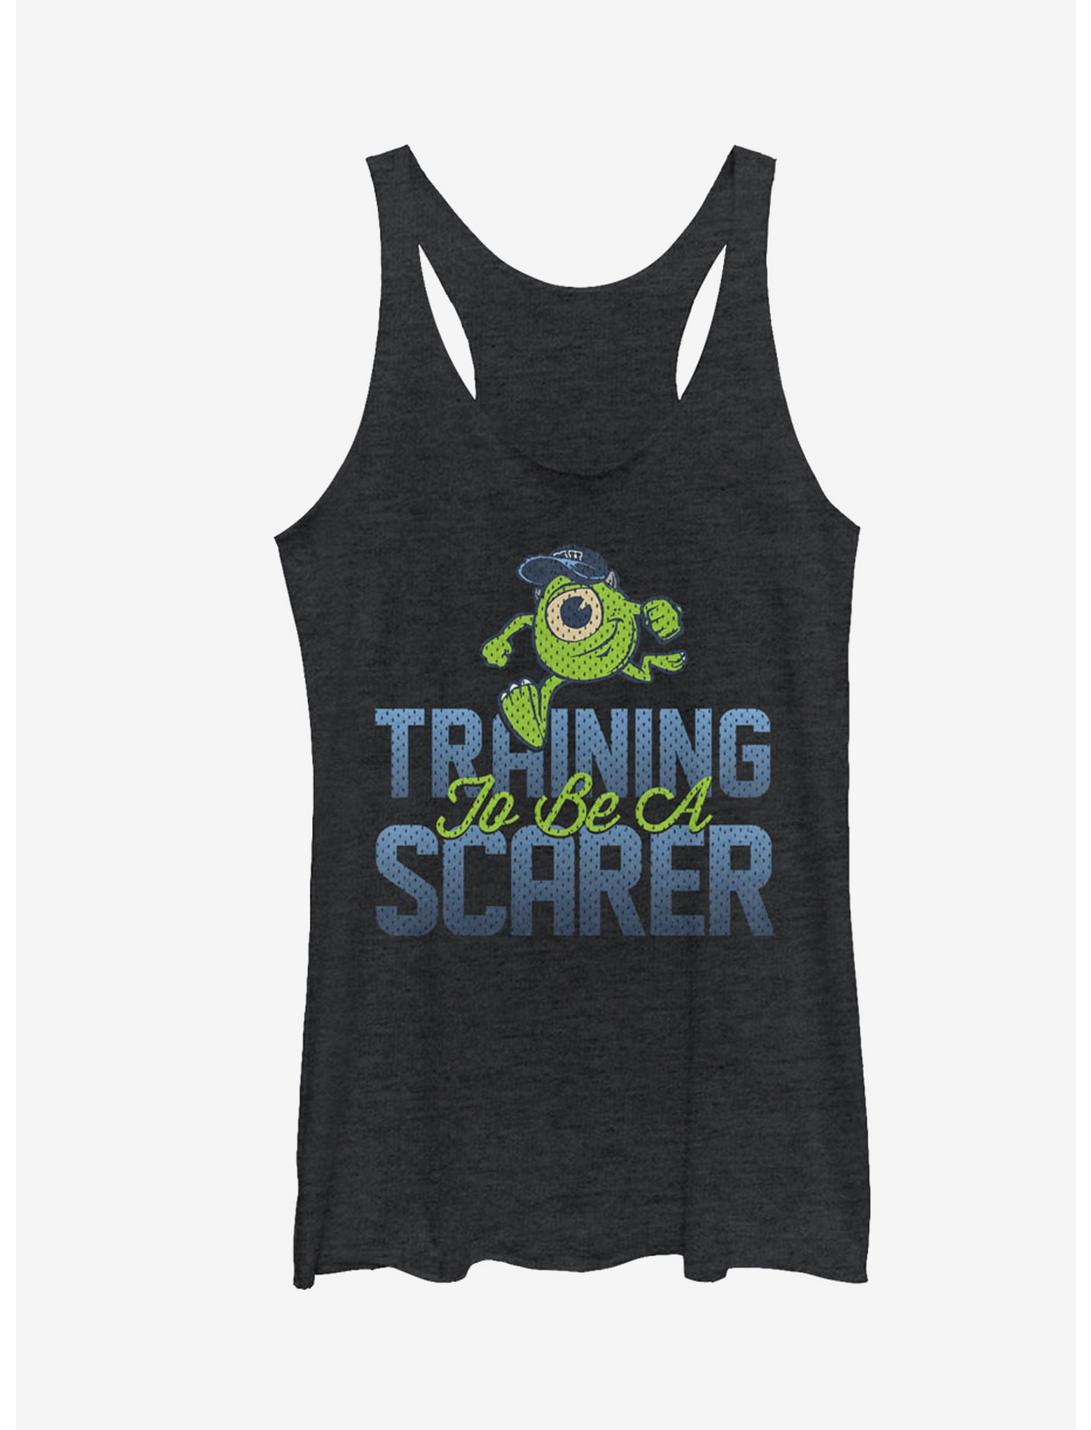 Monsters Inc. Training to be a Scarer Girls Tanks, BLK HTR, hi-res